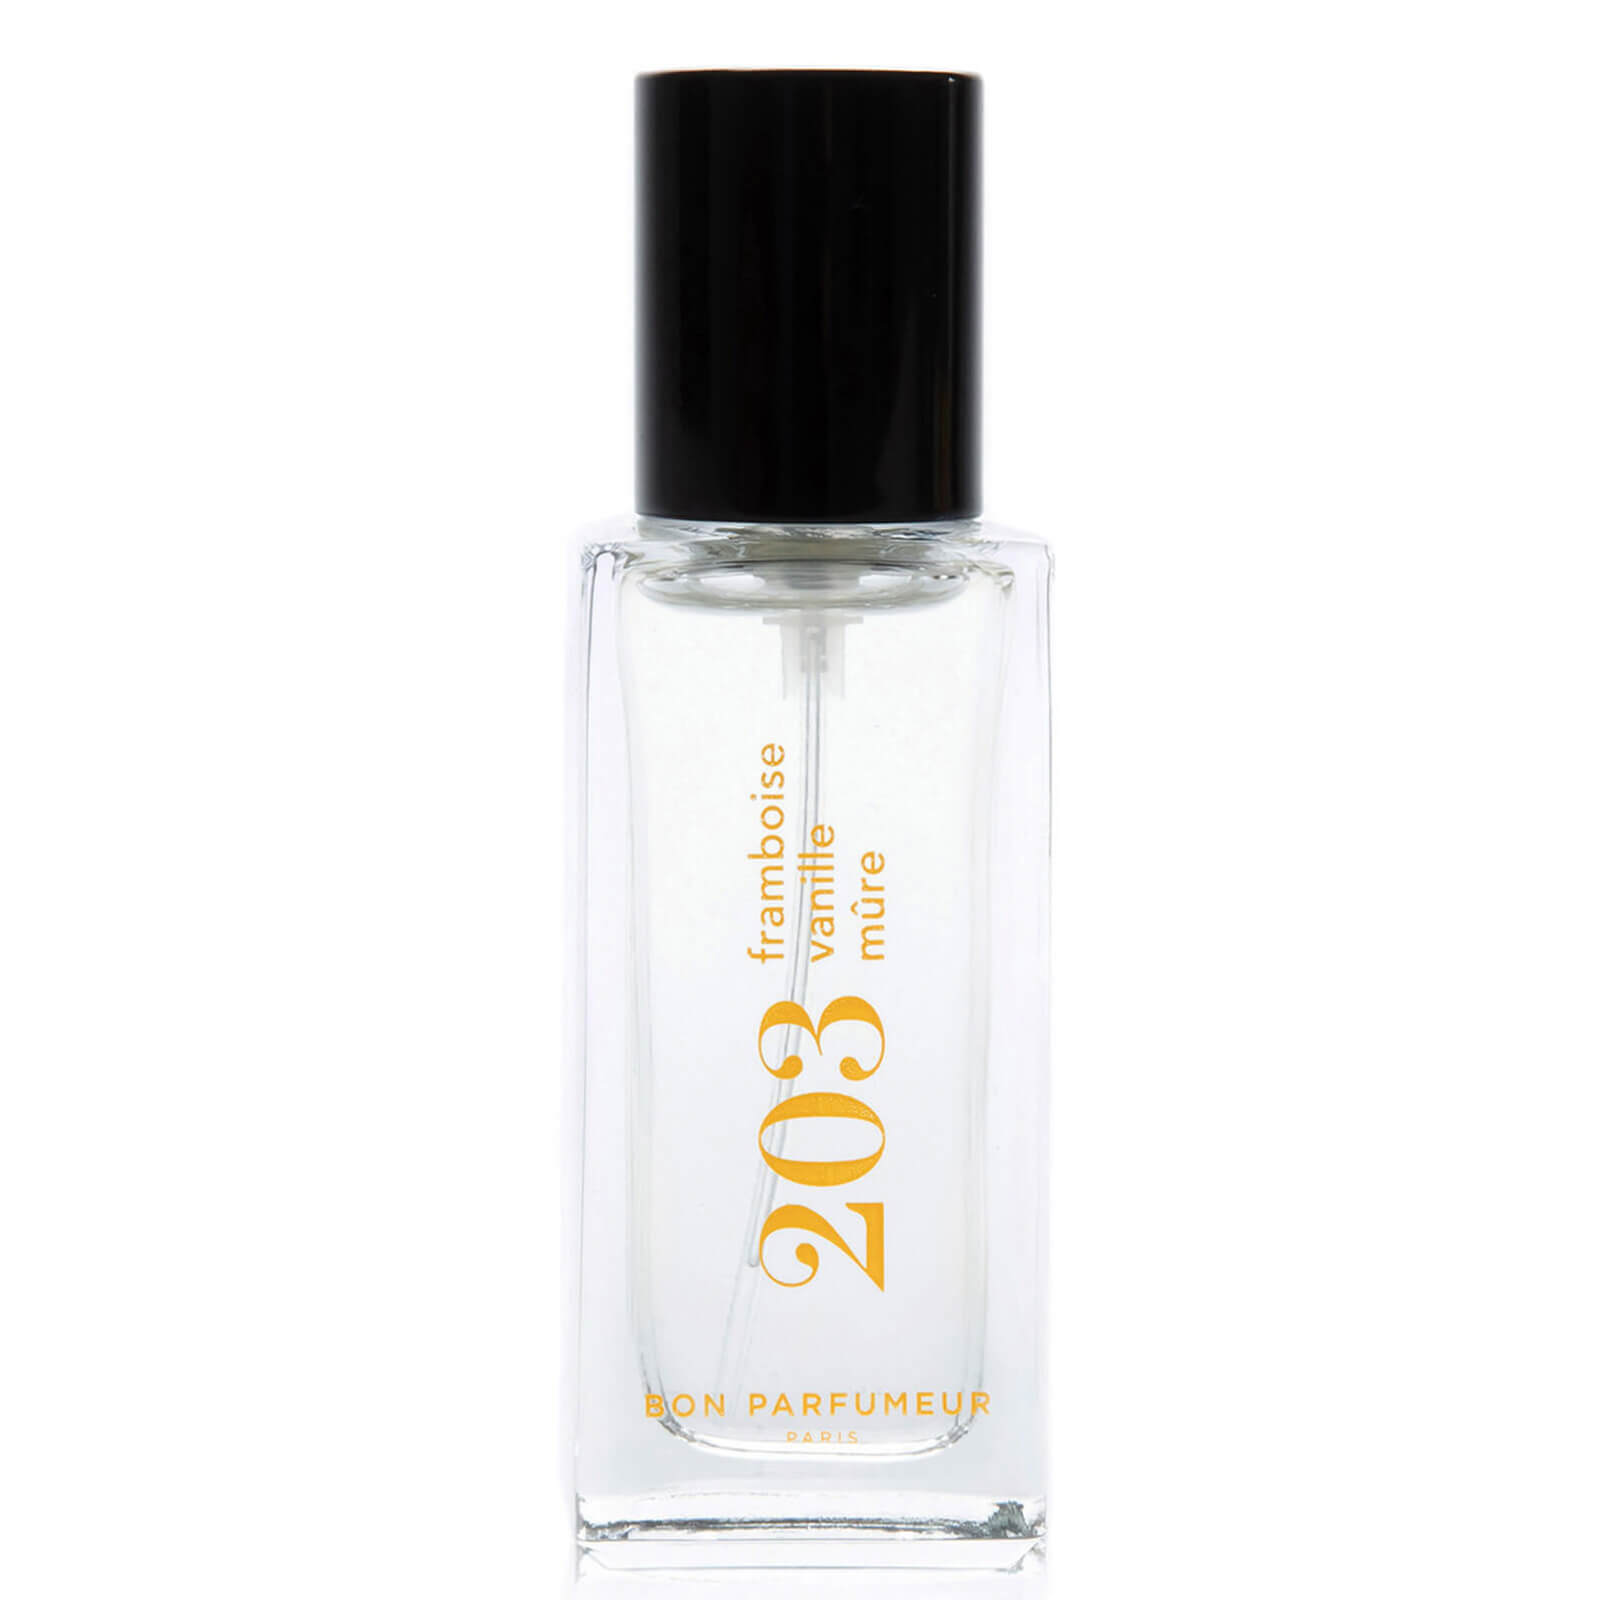 Bon Parfumeur 203 Eau de Parfum Frambuesa Vainilla Zarzamora - 15ml